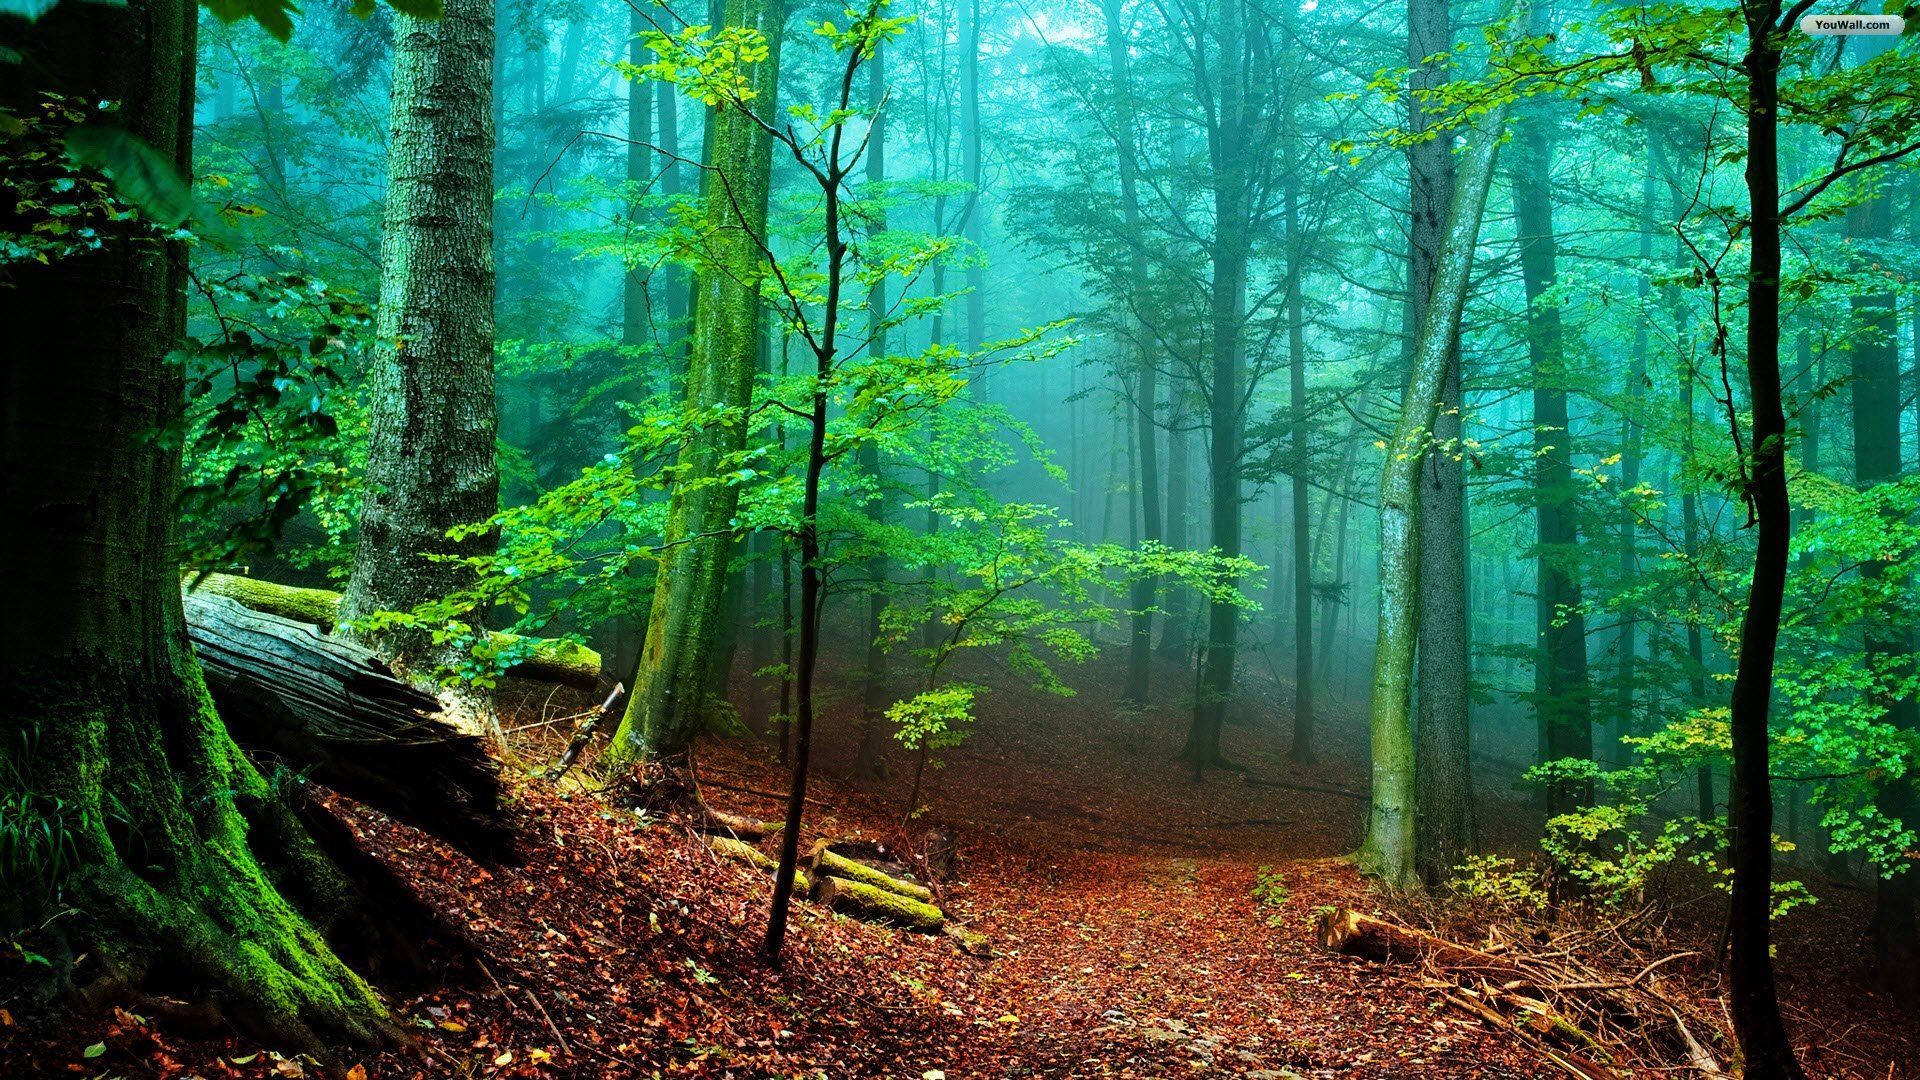 misty forest wallpaper,forest,woodland,nature,natural landscape,old growth forest